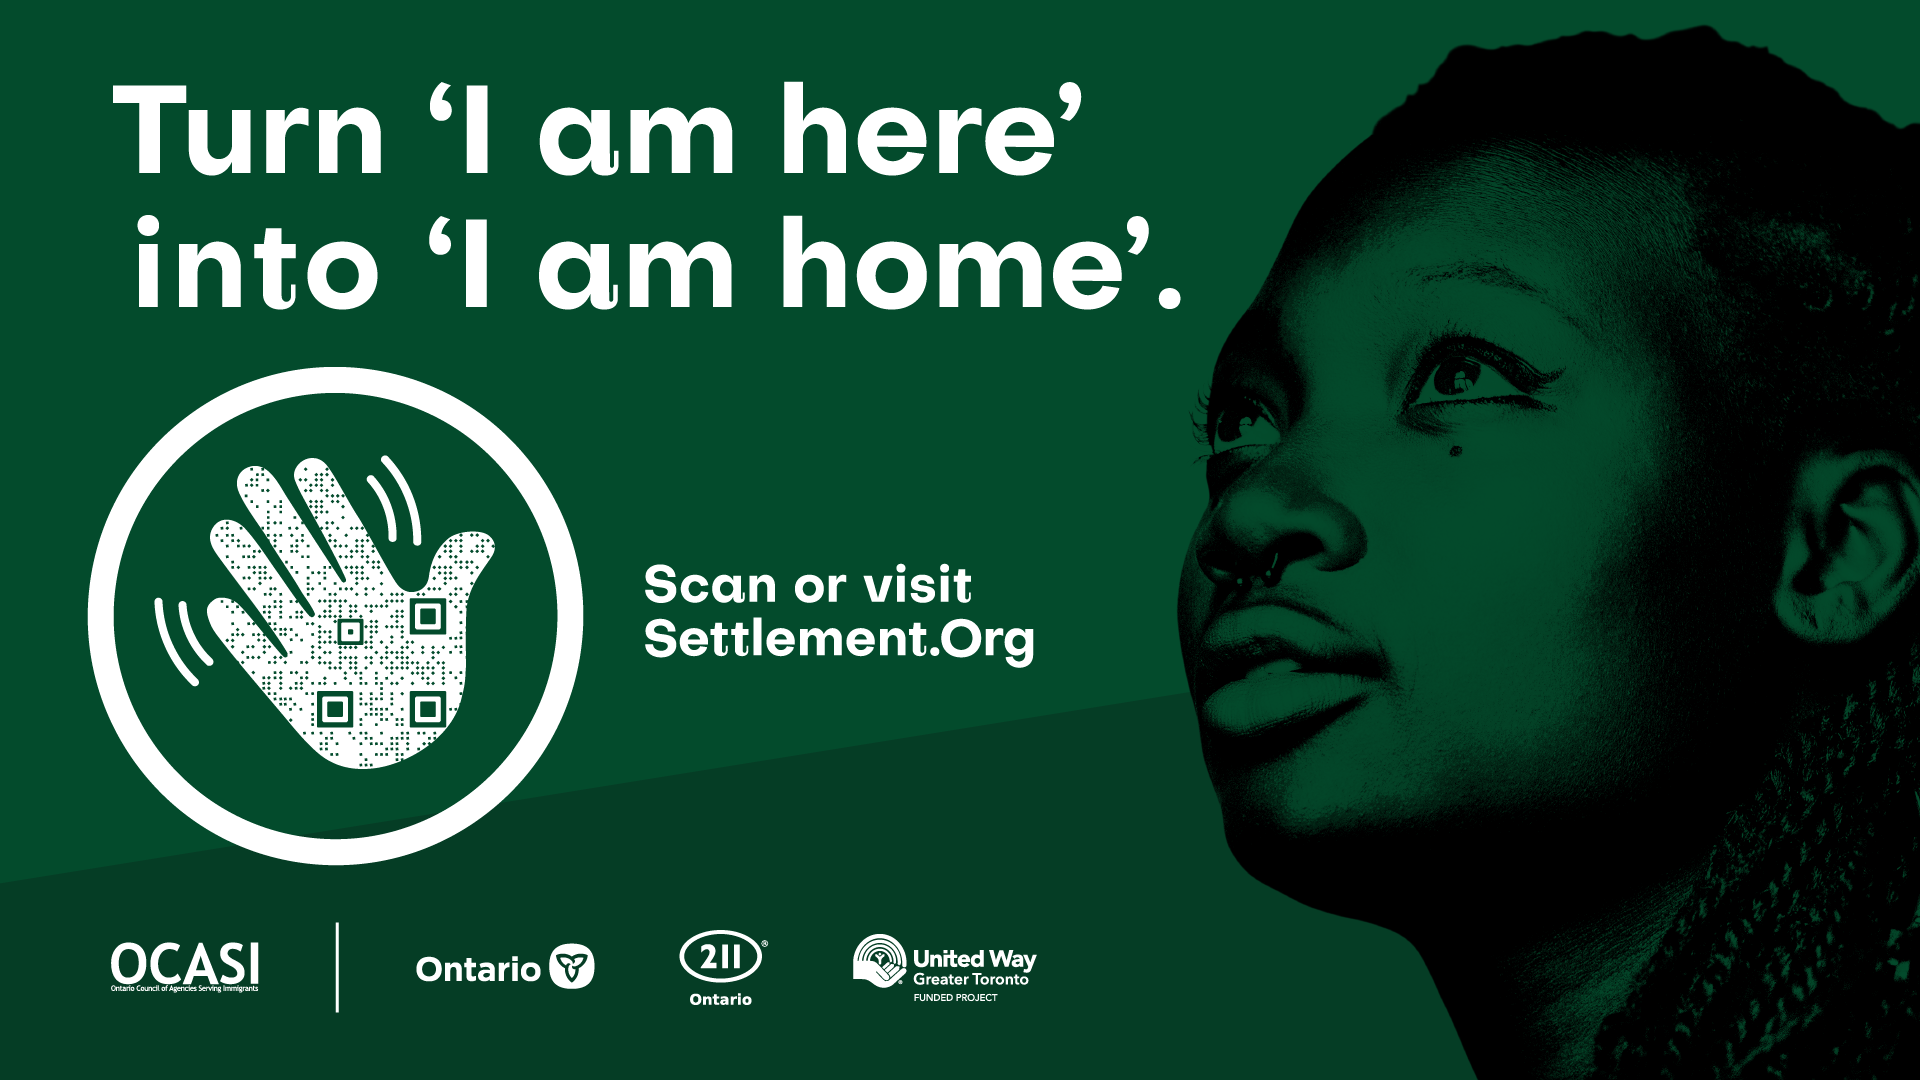 "Turn I am here into I am home" ad campaign 